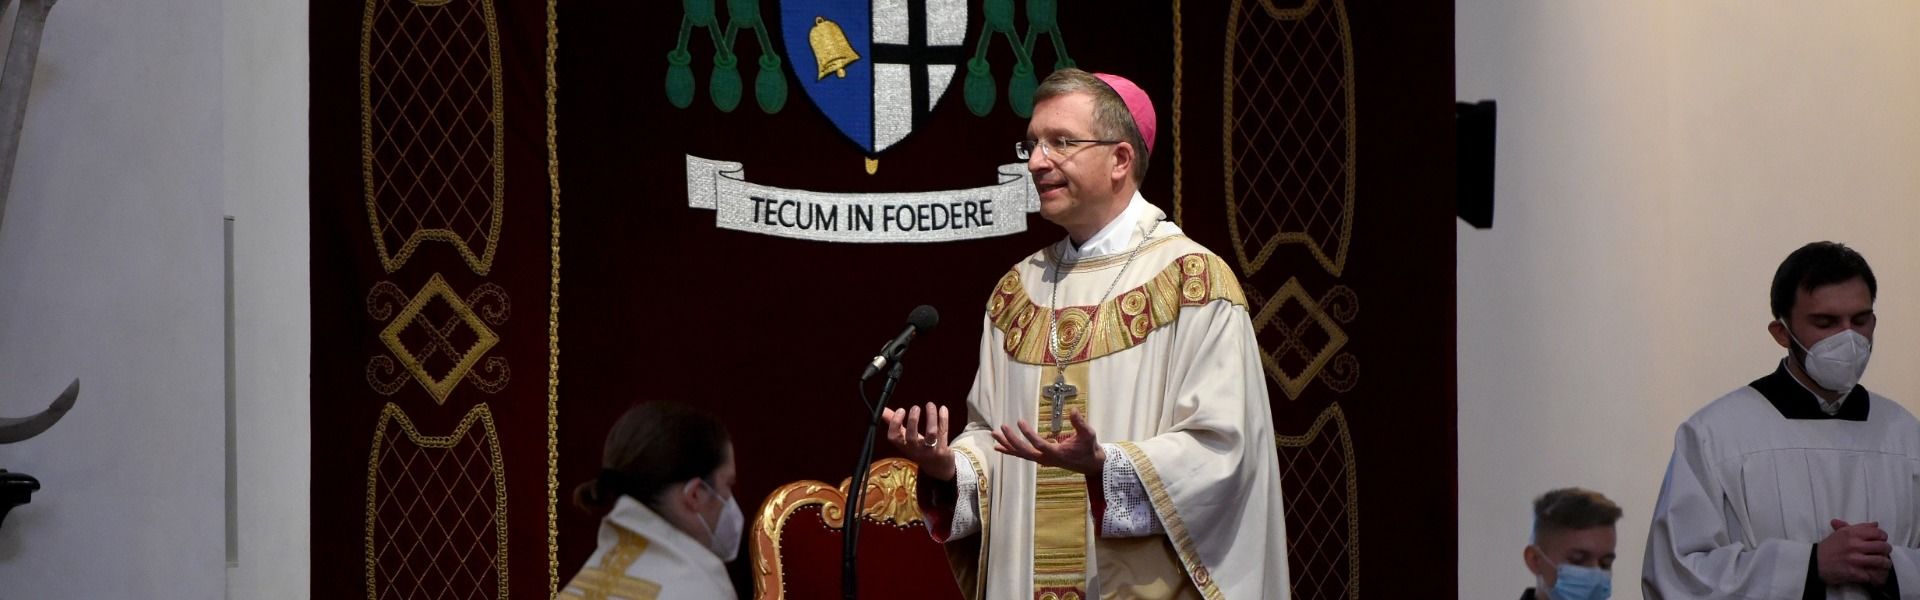 Gründonnerstag: Bischof Dr. Michael Gerber predigte im Fuldaer Dom